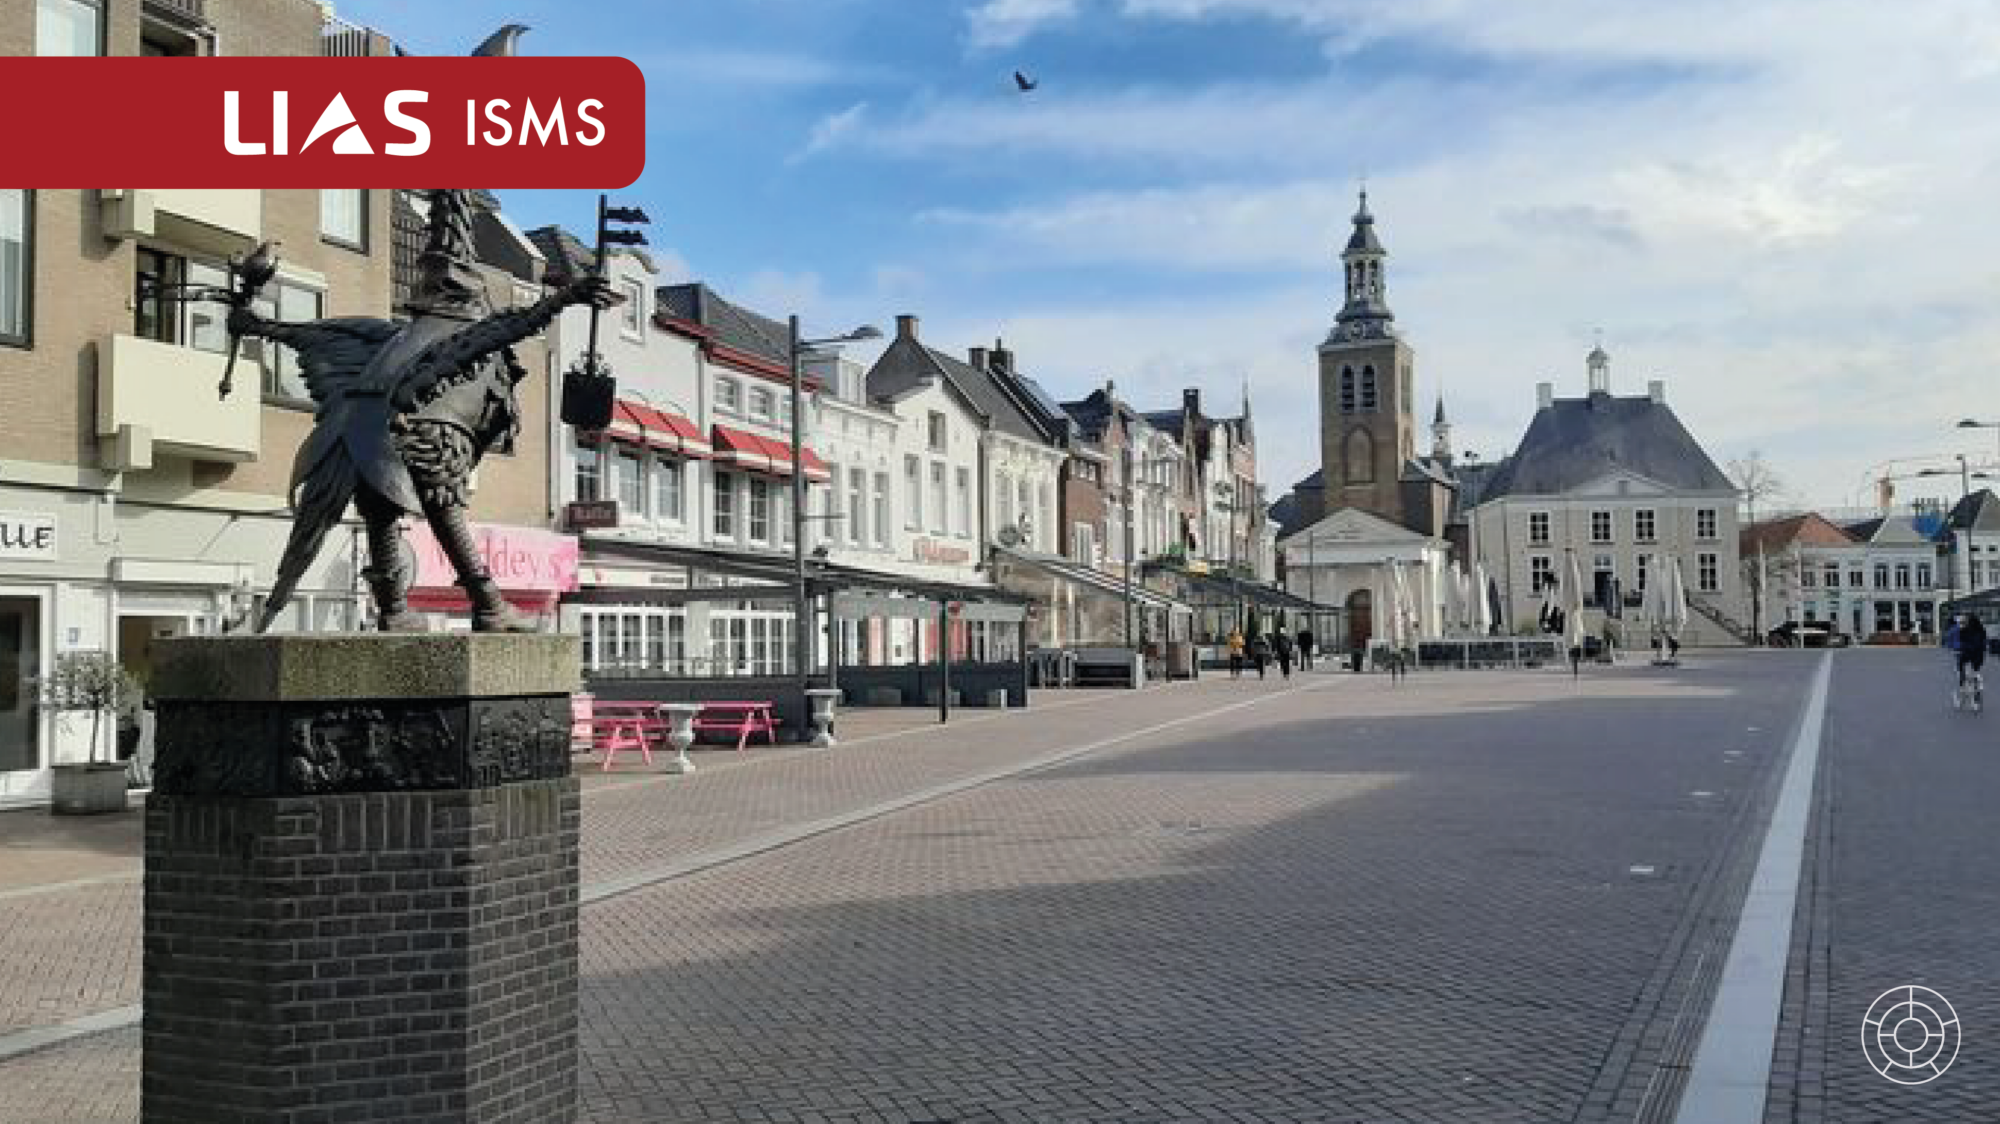 LIAS ISMS Regiodag in Roosendaal